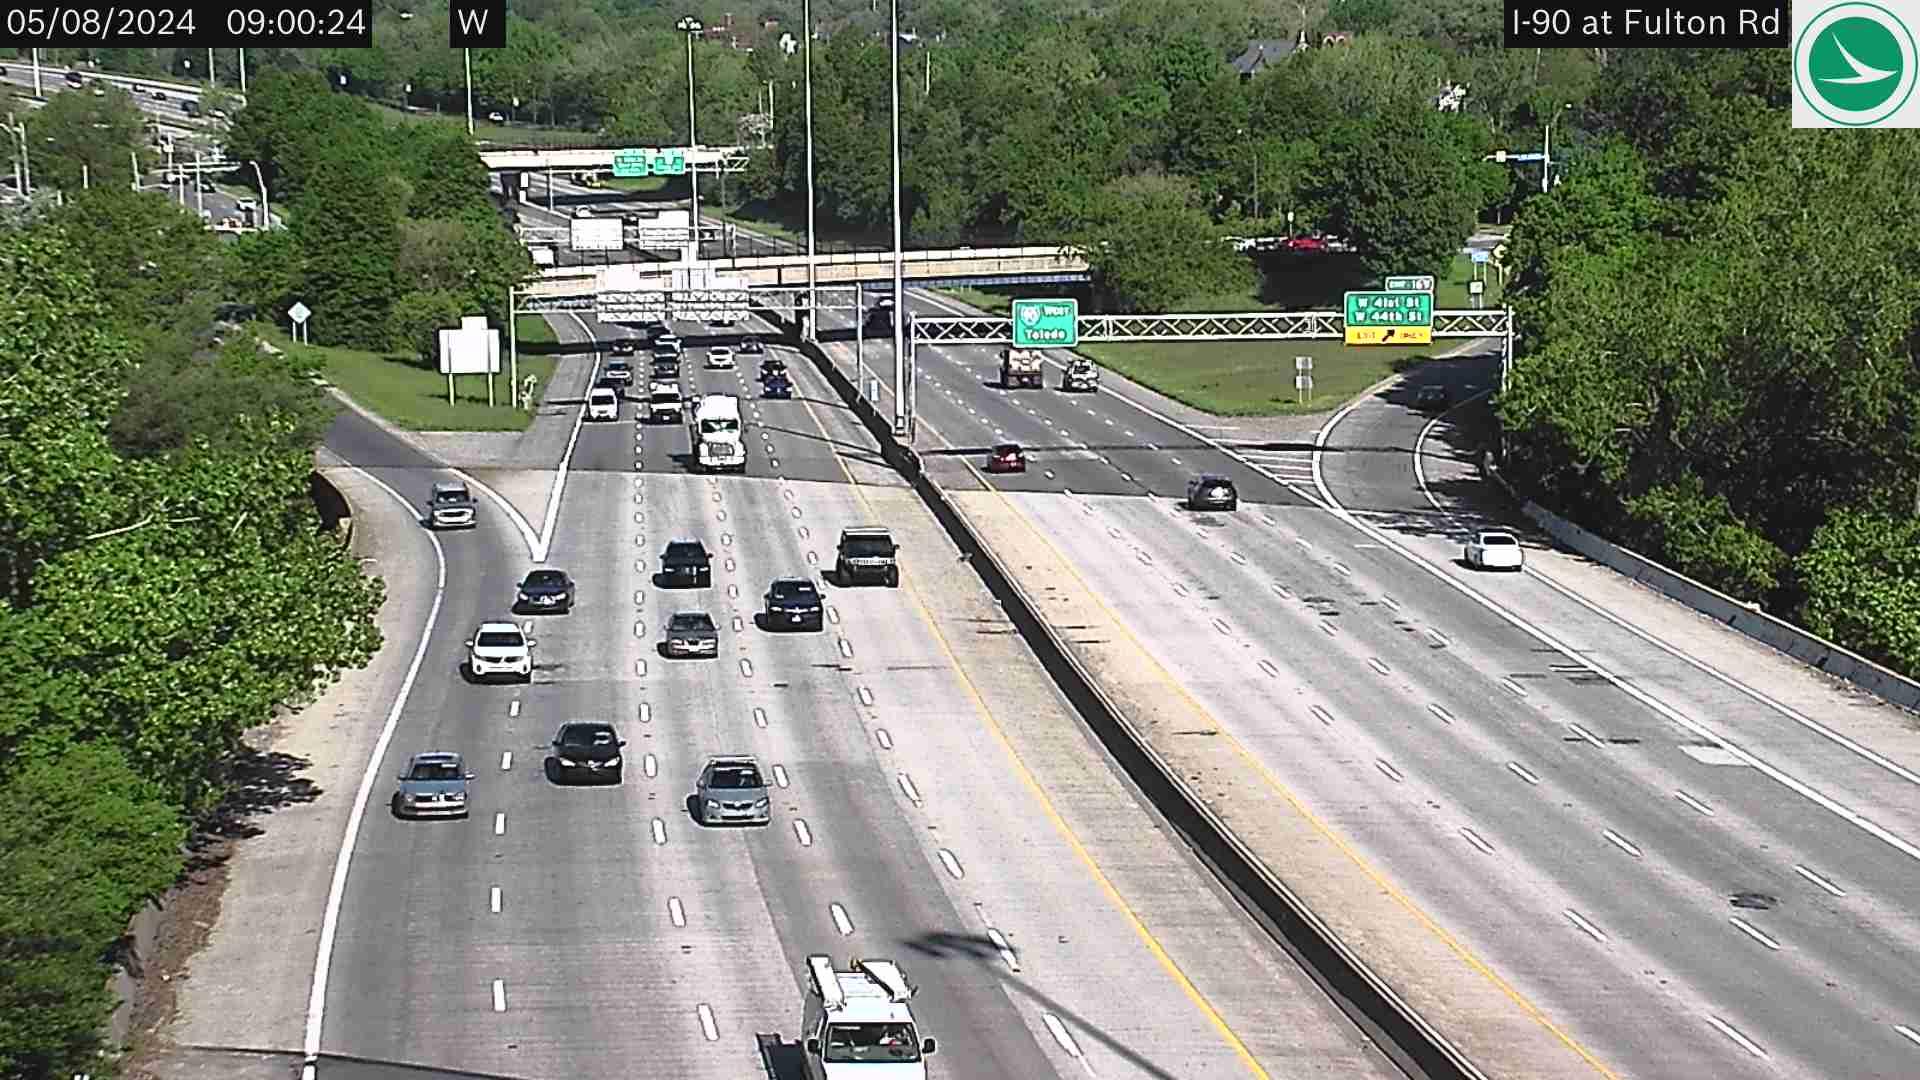 Ohio City: I-90 at Fulton Rd Traffic Camera